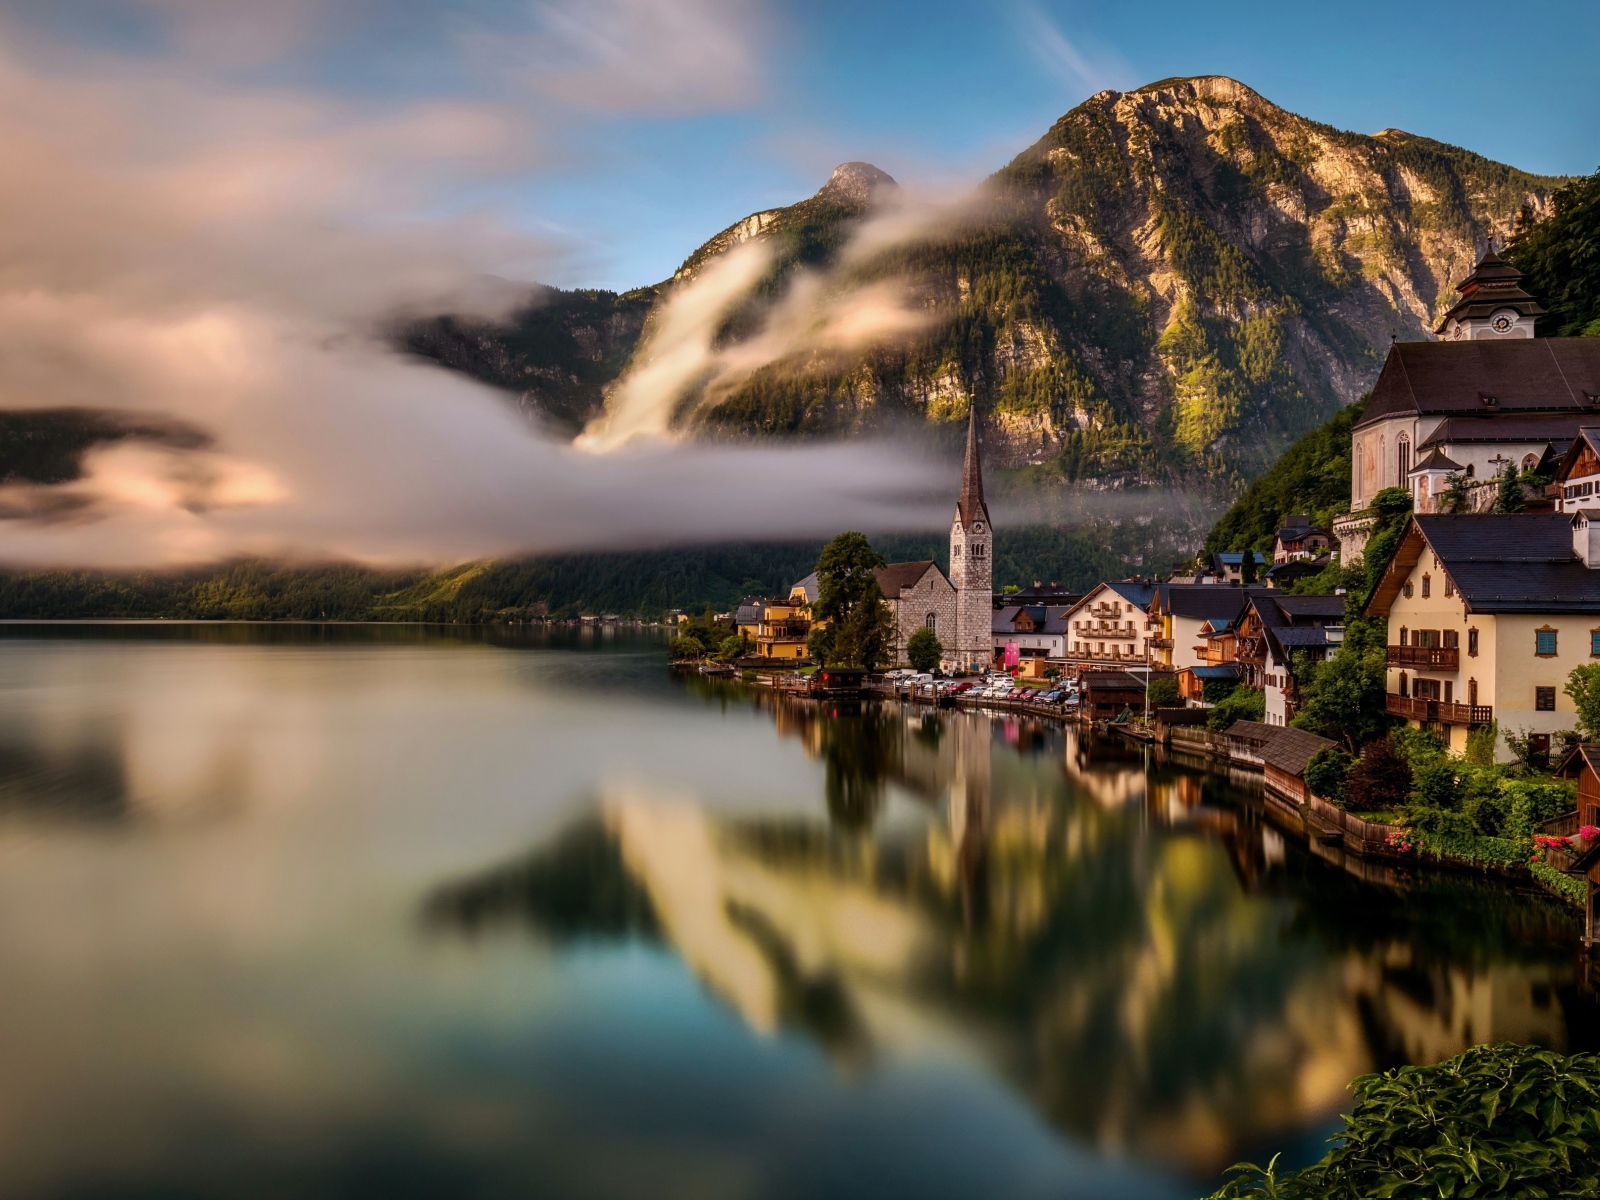 City of Hallstatt over the misty lake in the Alps, Austria